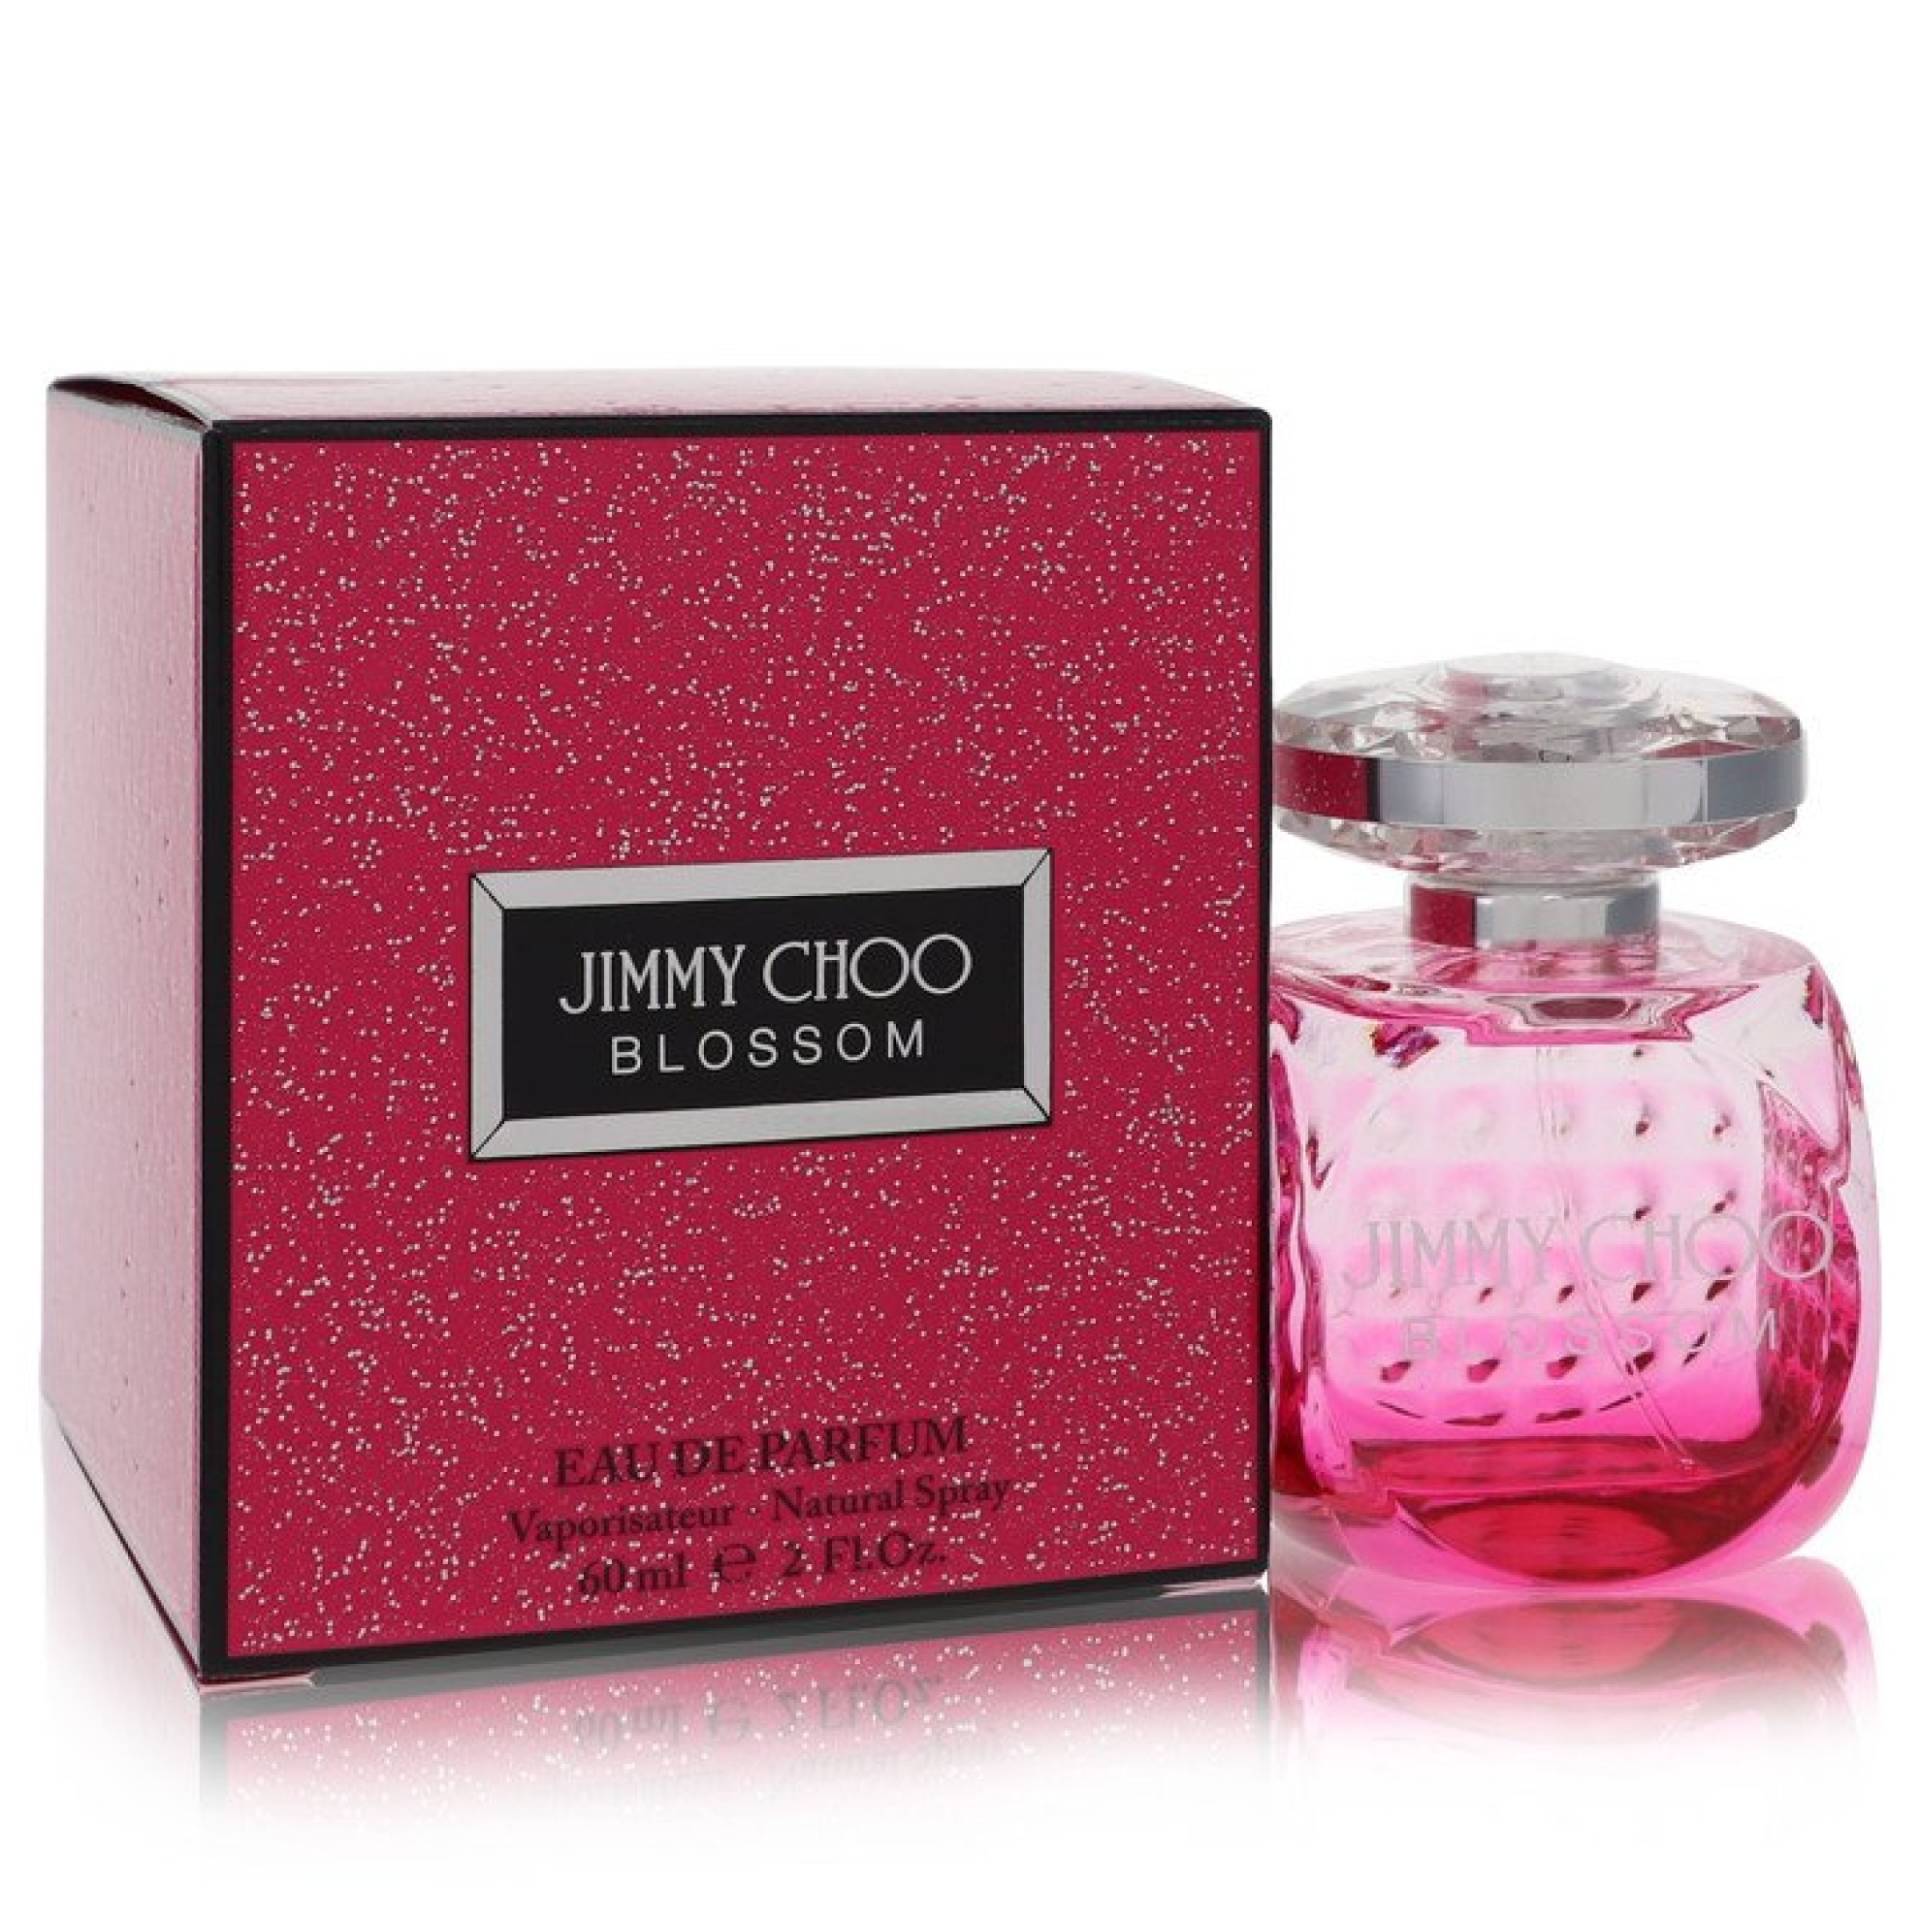 Jimmy Choo Blossom Eau De Parfum Spray 60 ml von Jimmy Choo